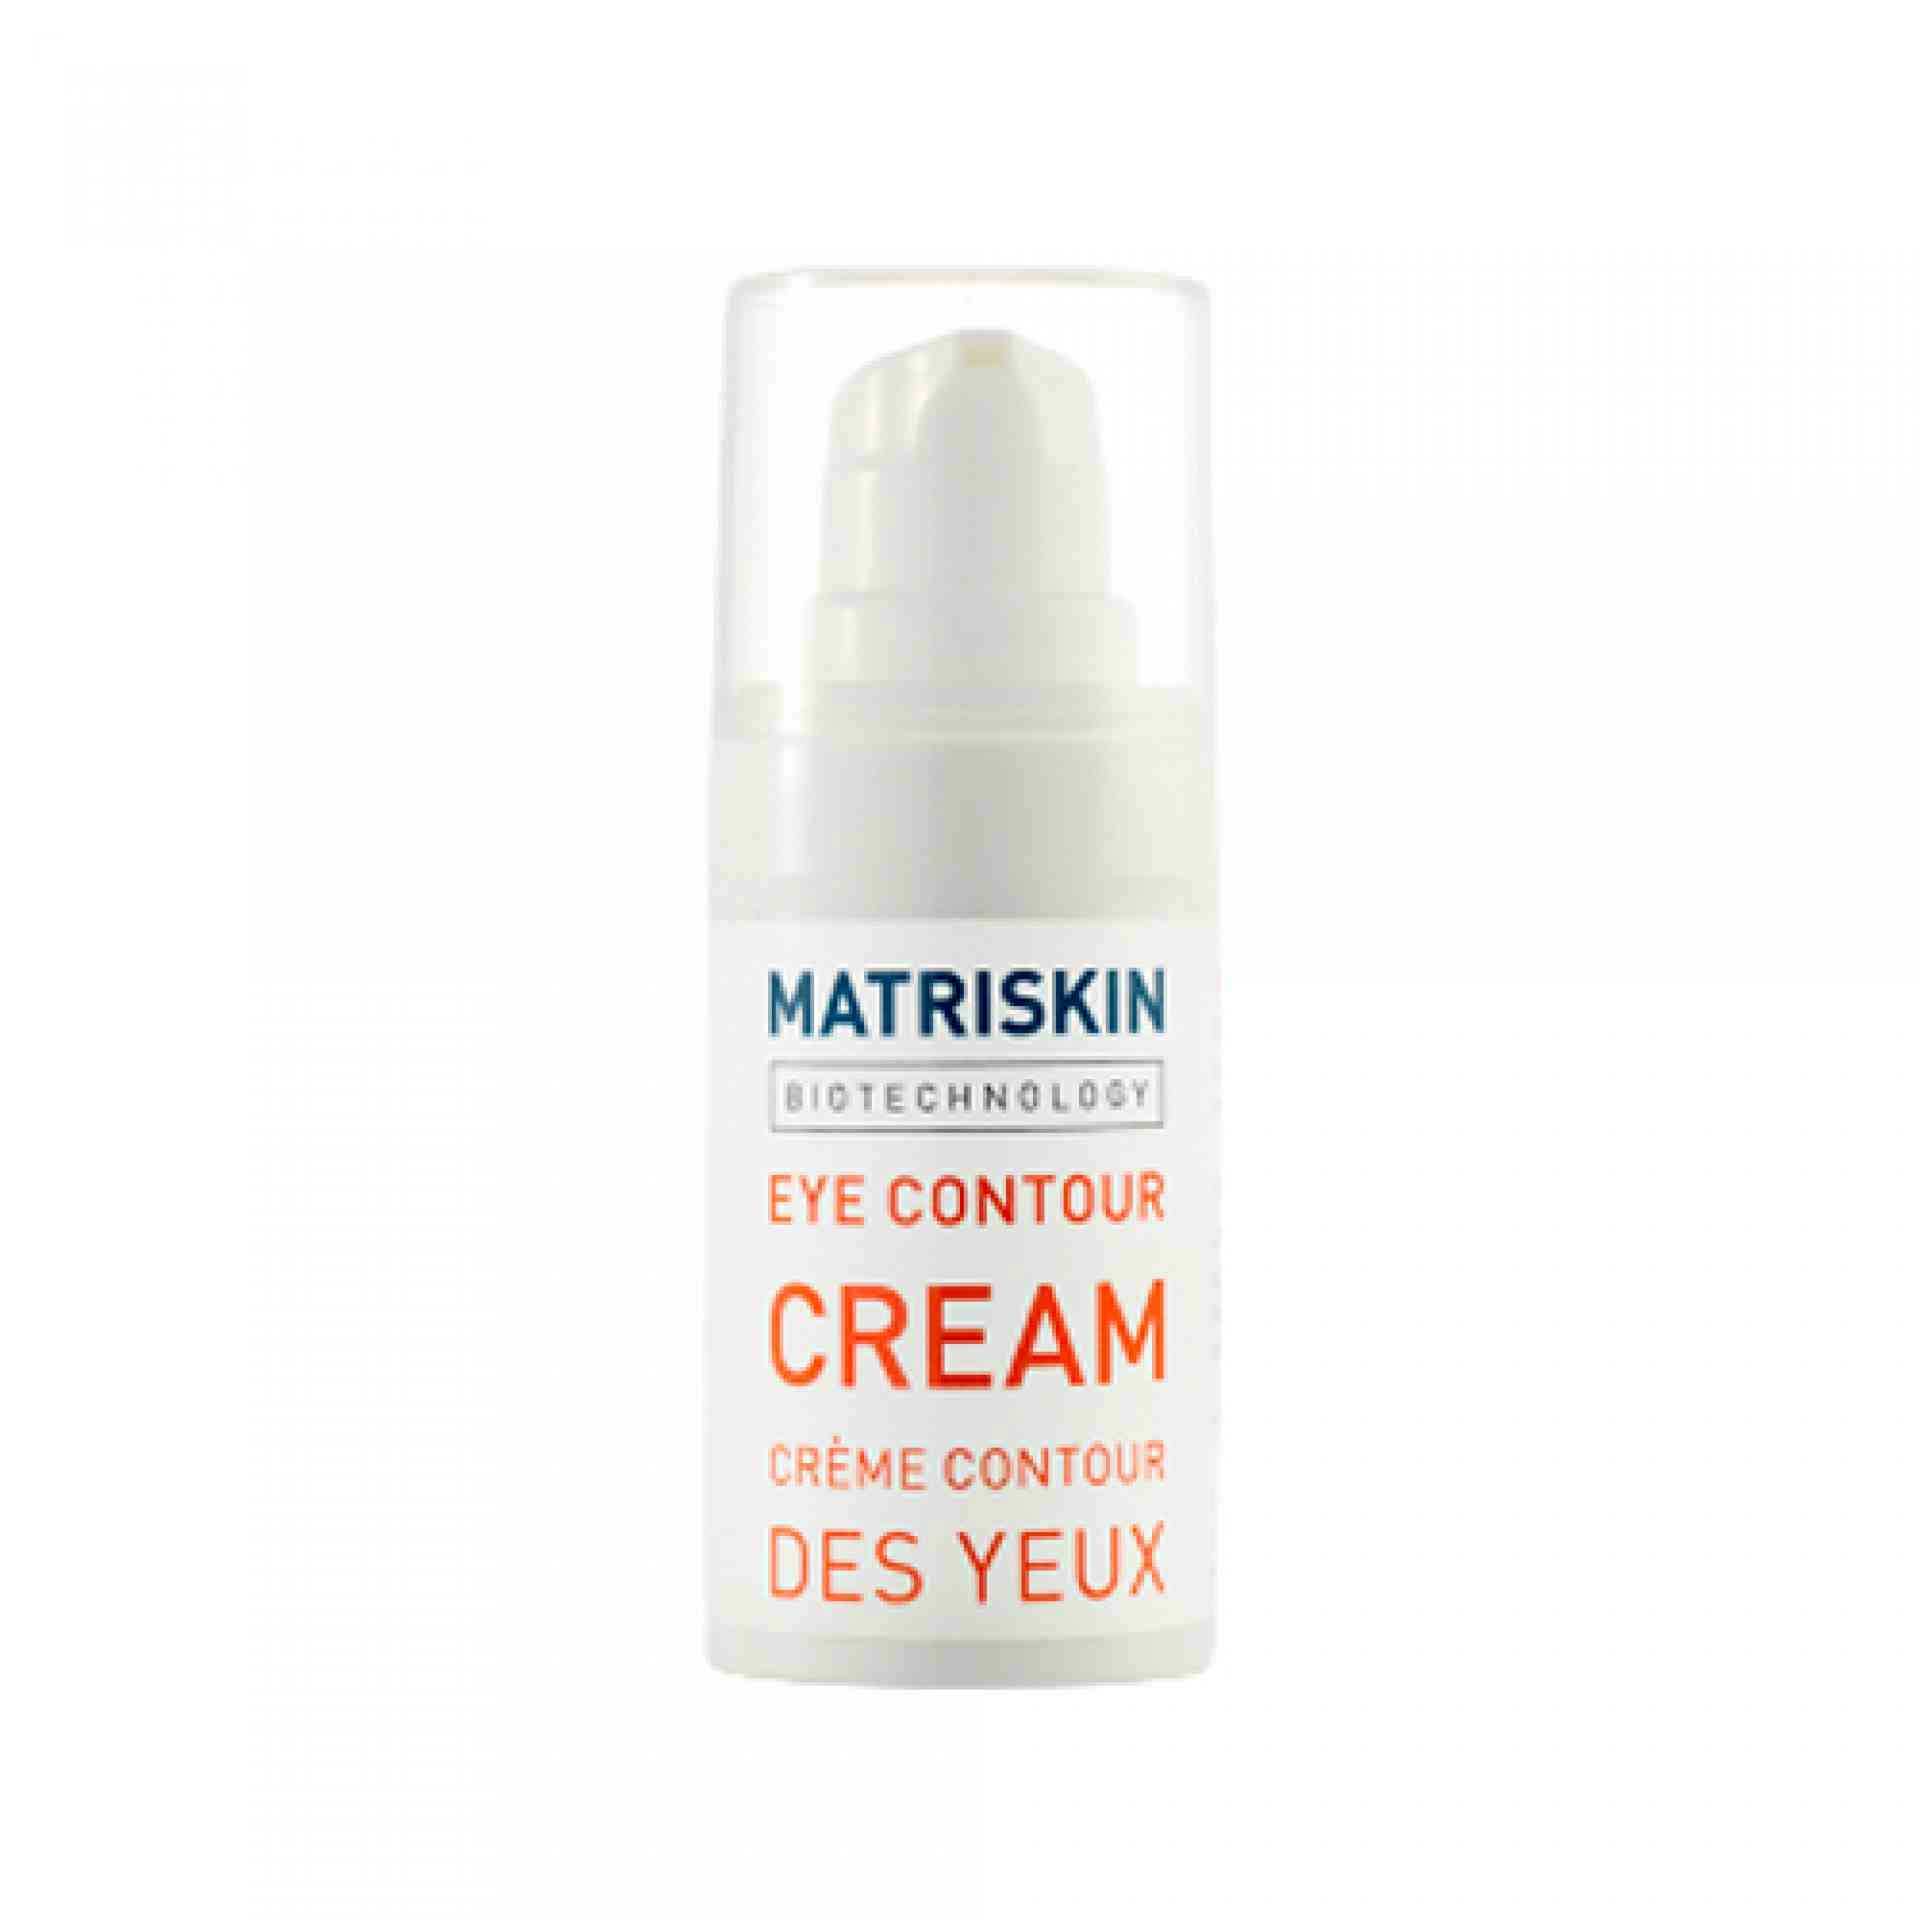 Eye Contour Cream 15ml Matriskin ®